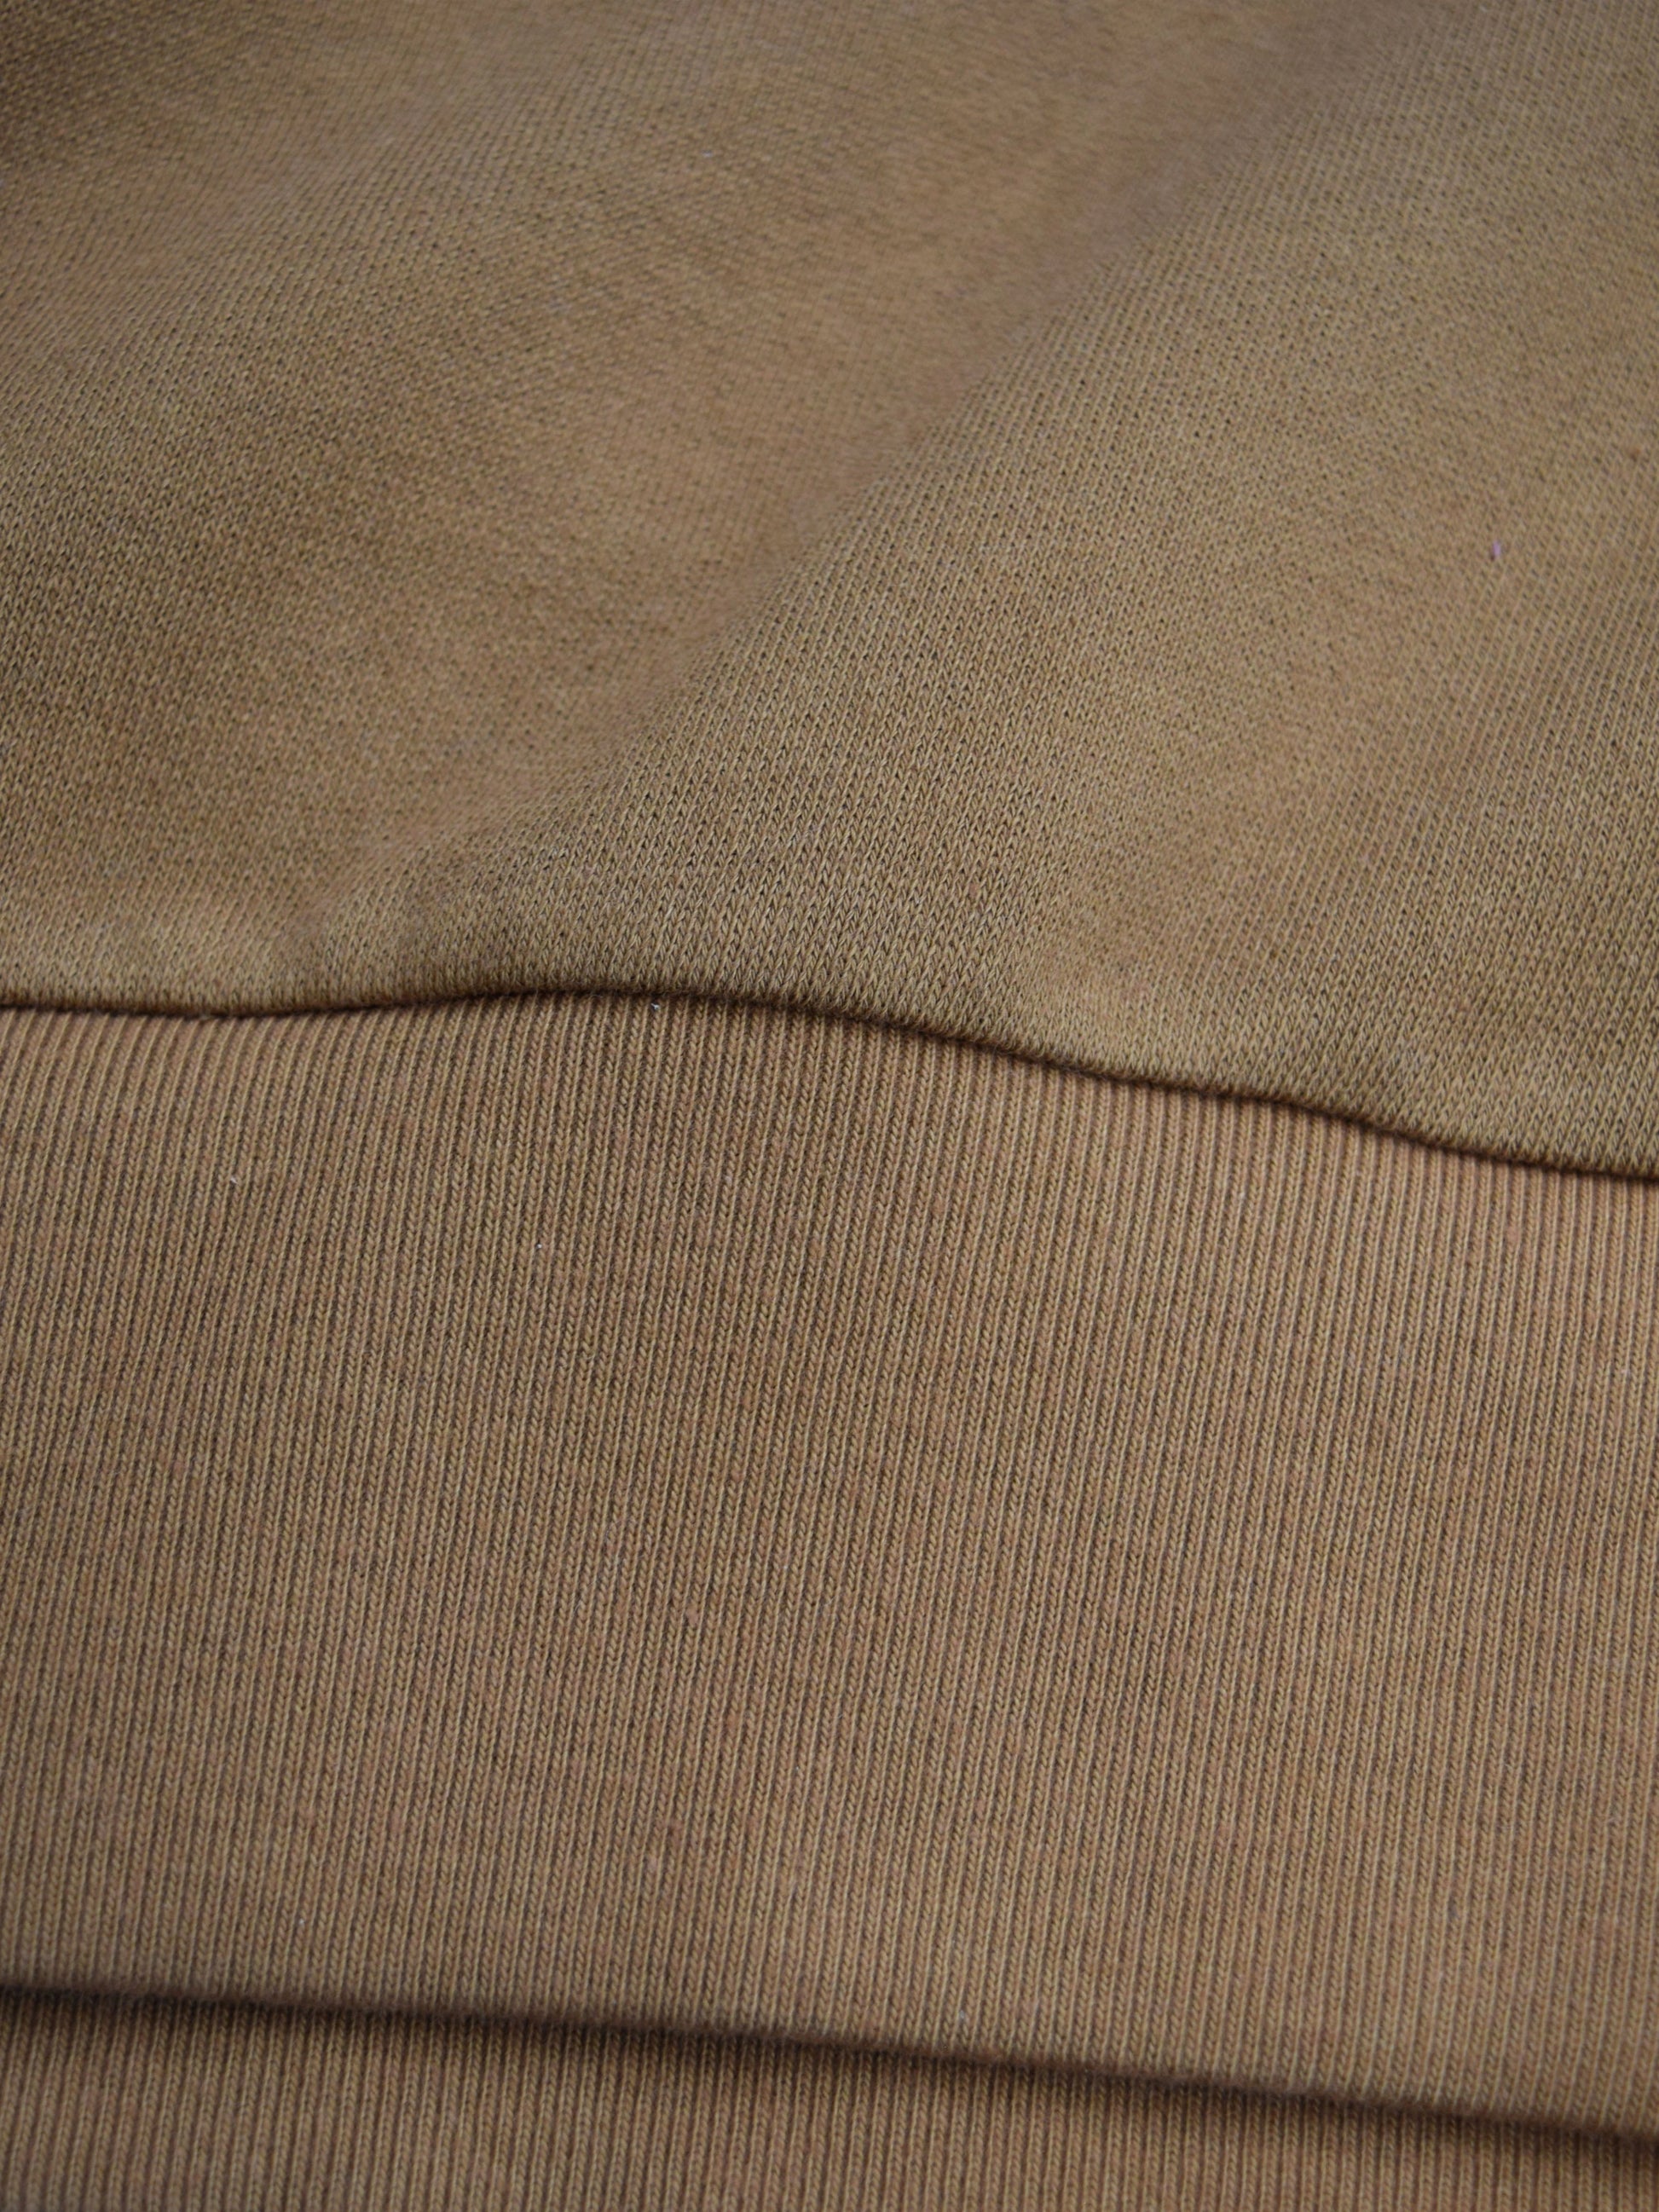 Close-up of cotton fabric